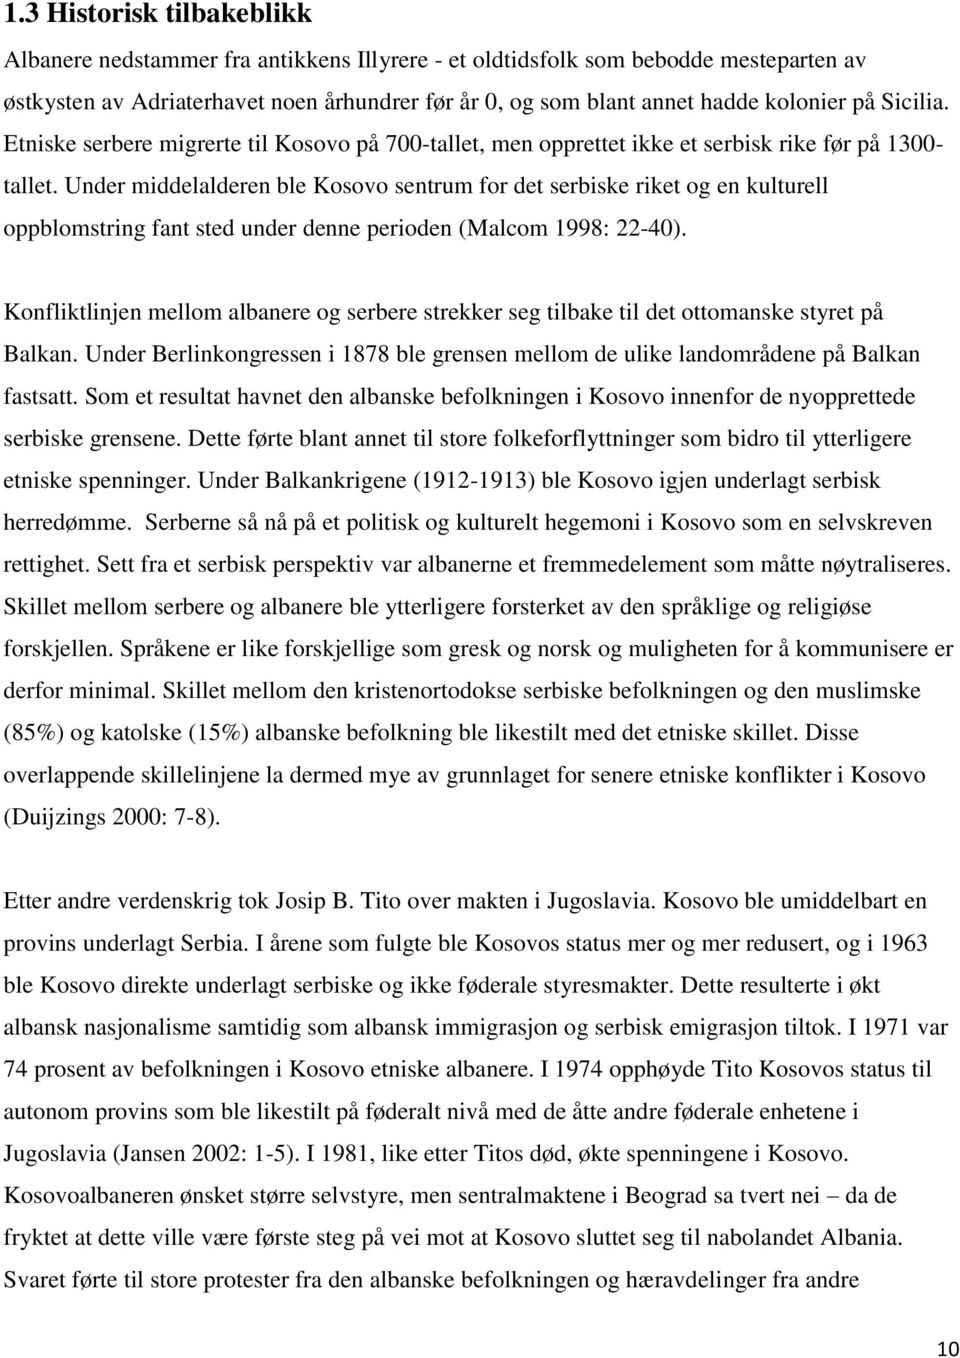 Under middelalderen ble Kosovo sentrum for det serbiske riket og en kulturell oppblomstring fant sted under denne perioden (Malcom 1998: 22-40).